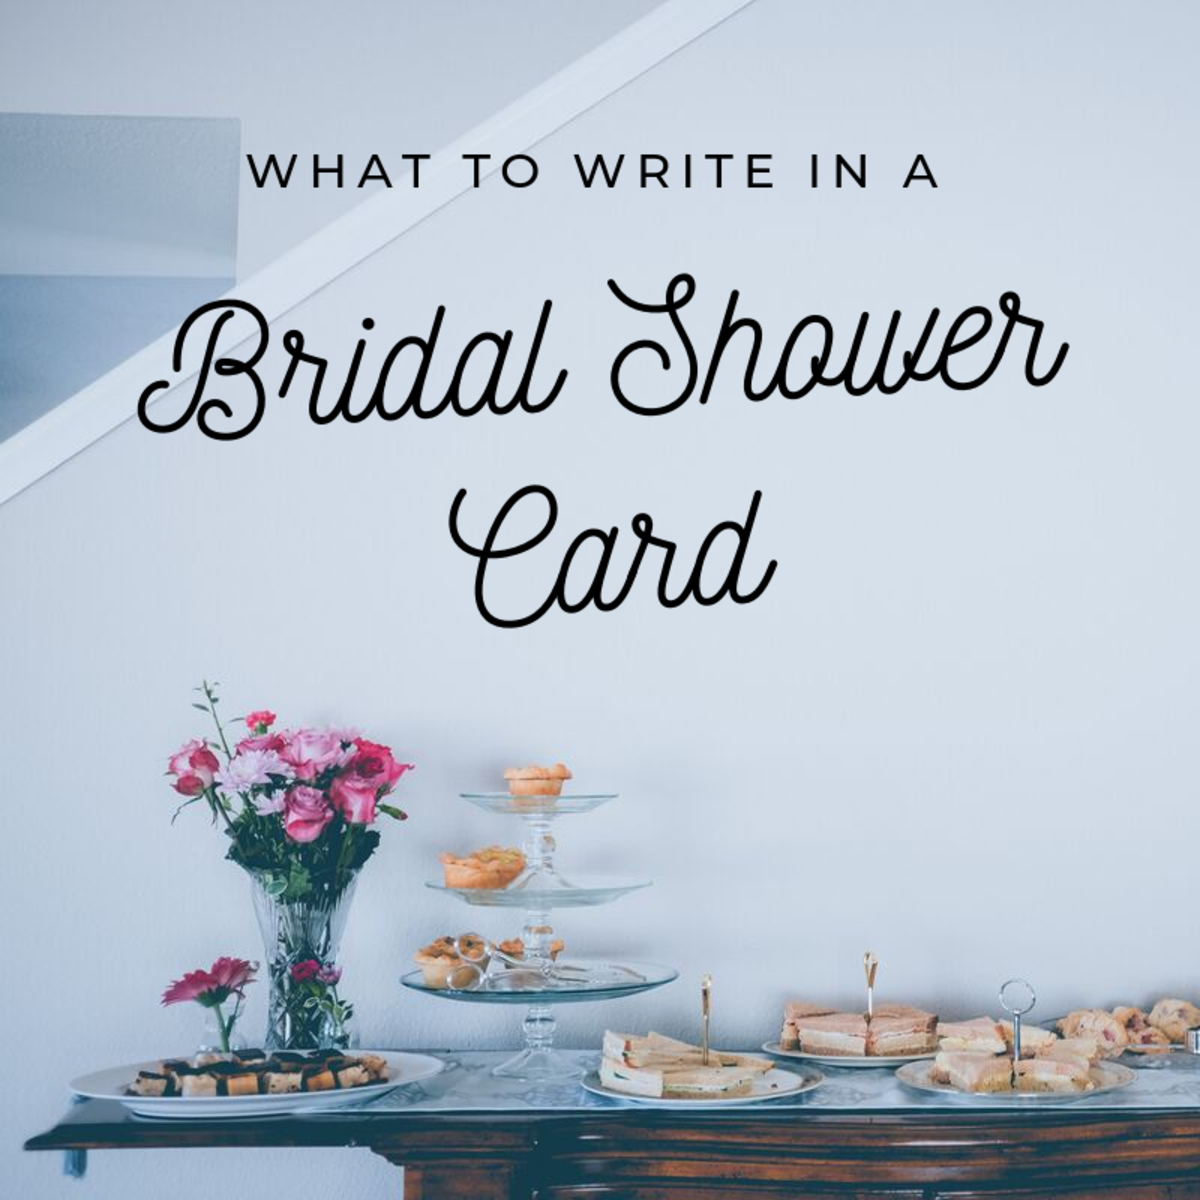 Bridal Shower Card Designs Best Design Idea